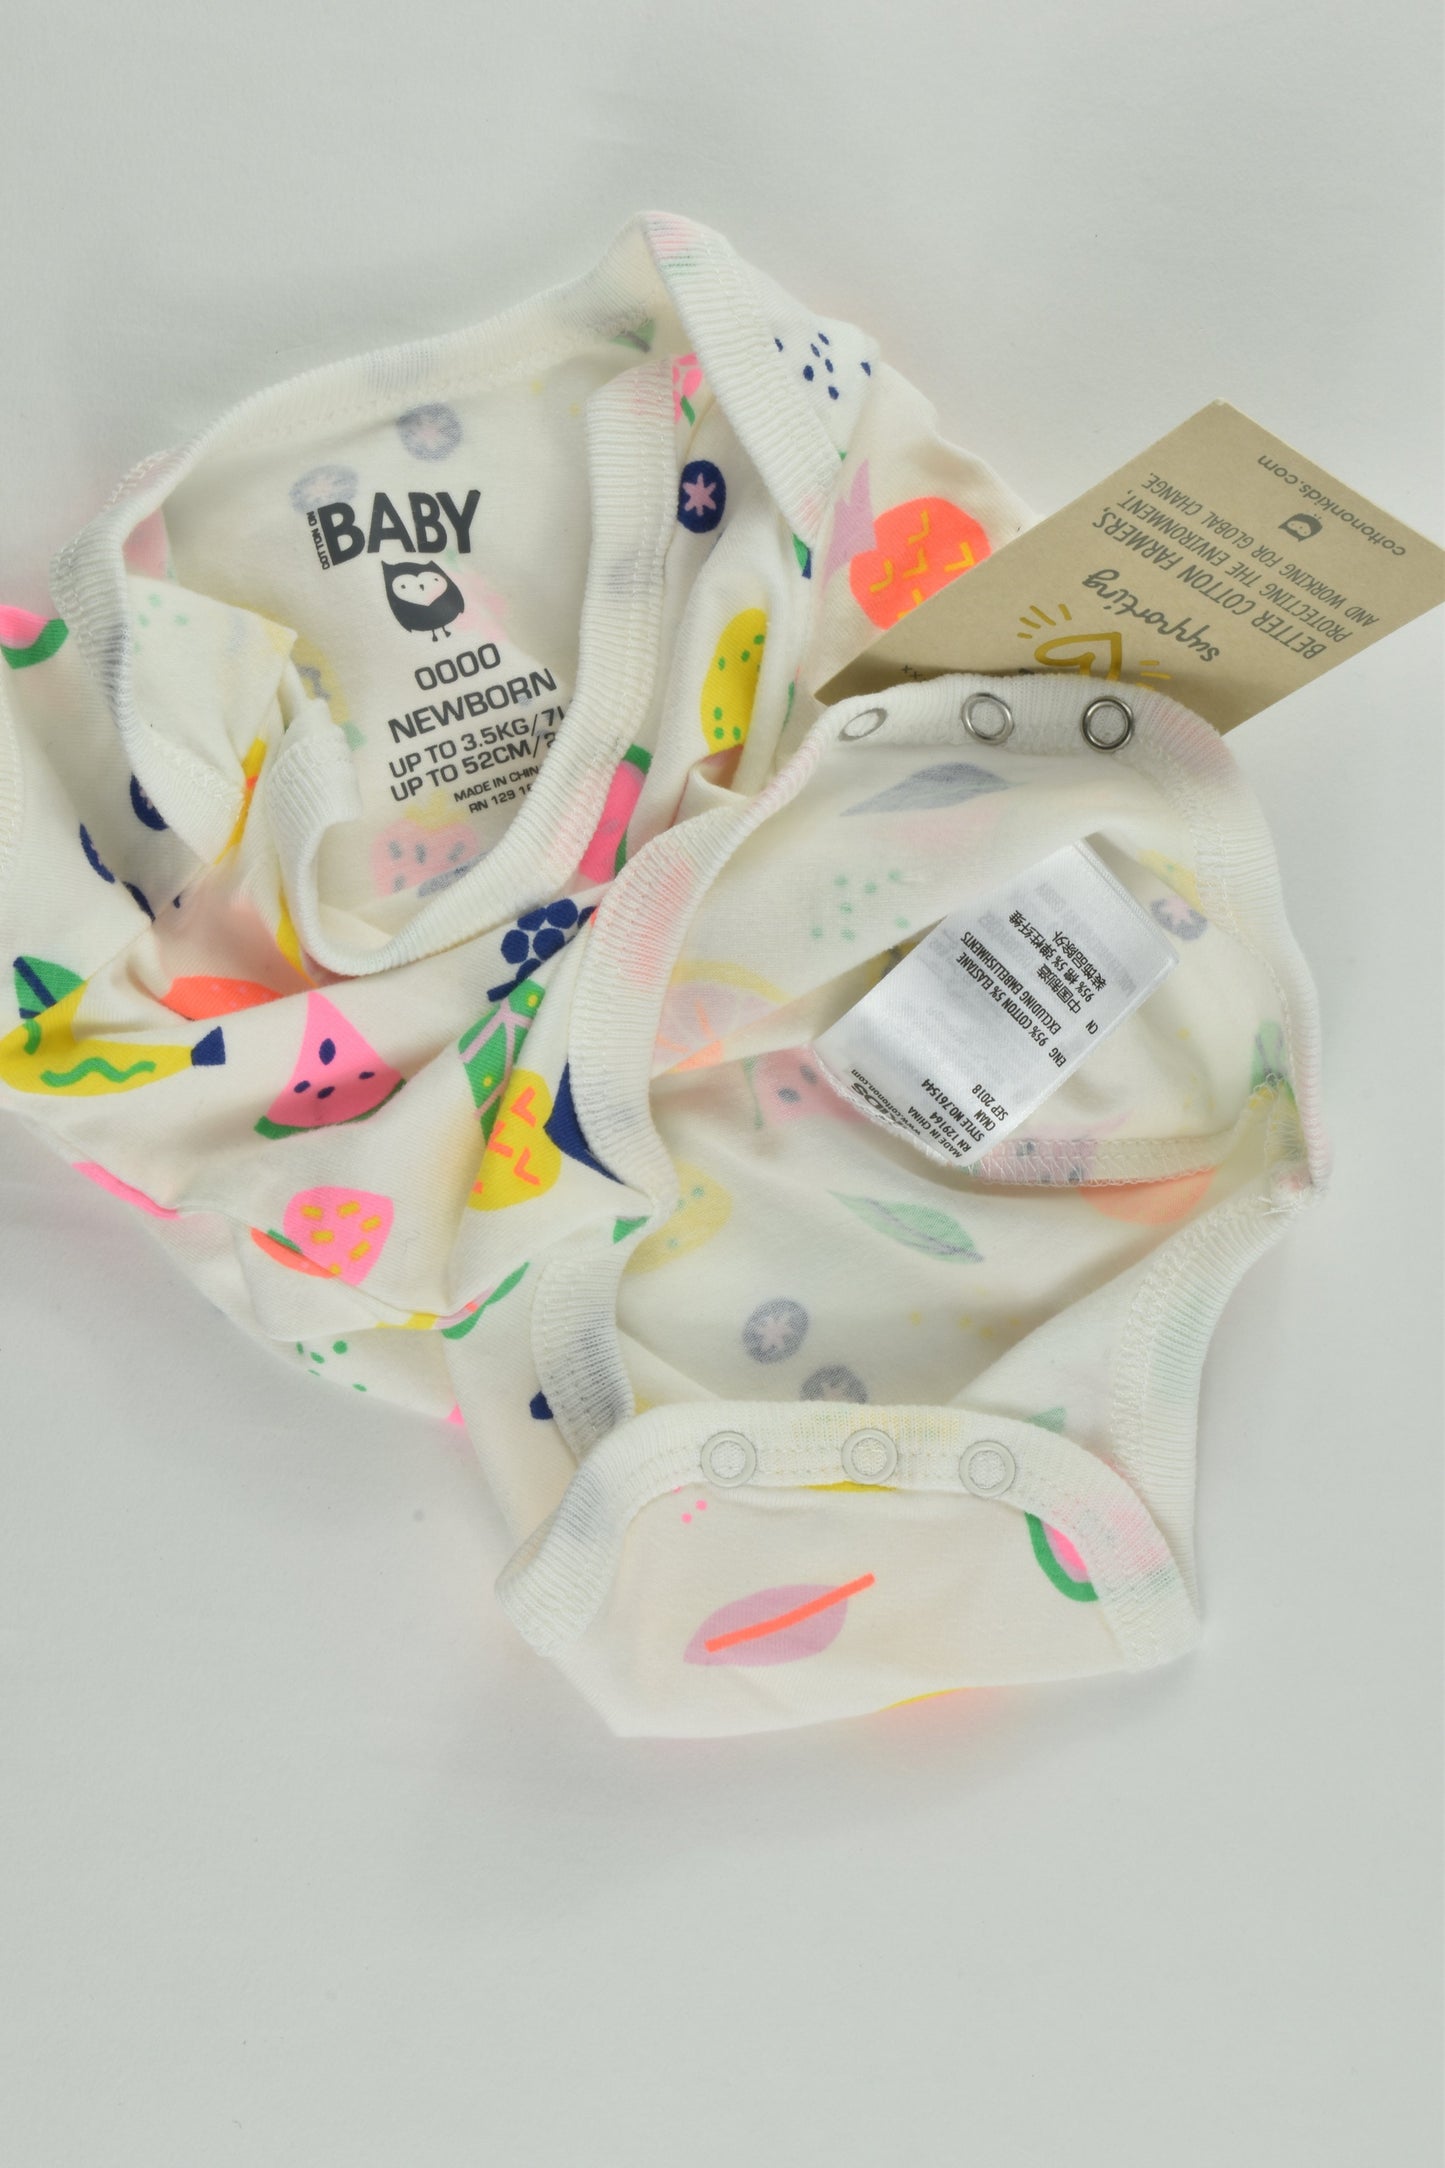 NEW Cotton On Baby Size 0000 (Newborn) Fruit Bodysuit